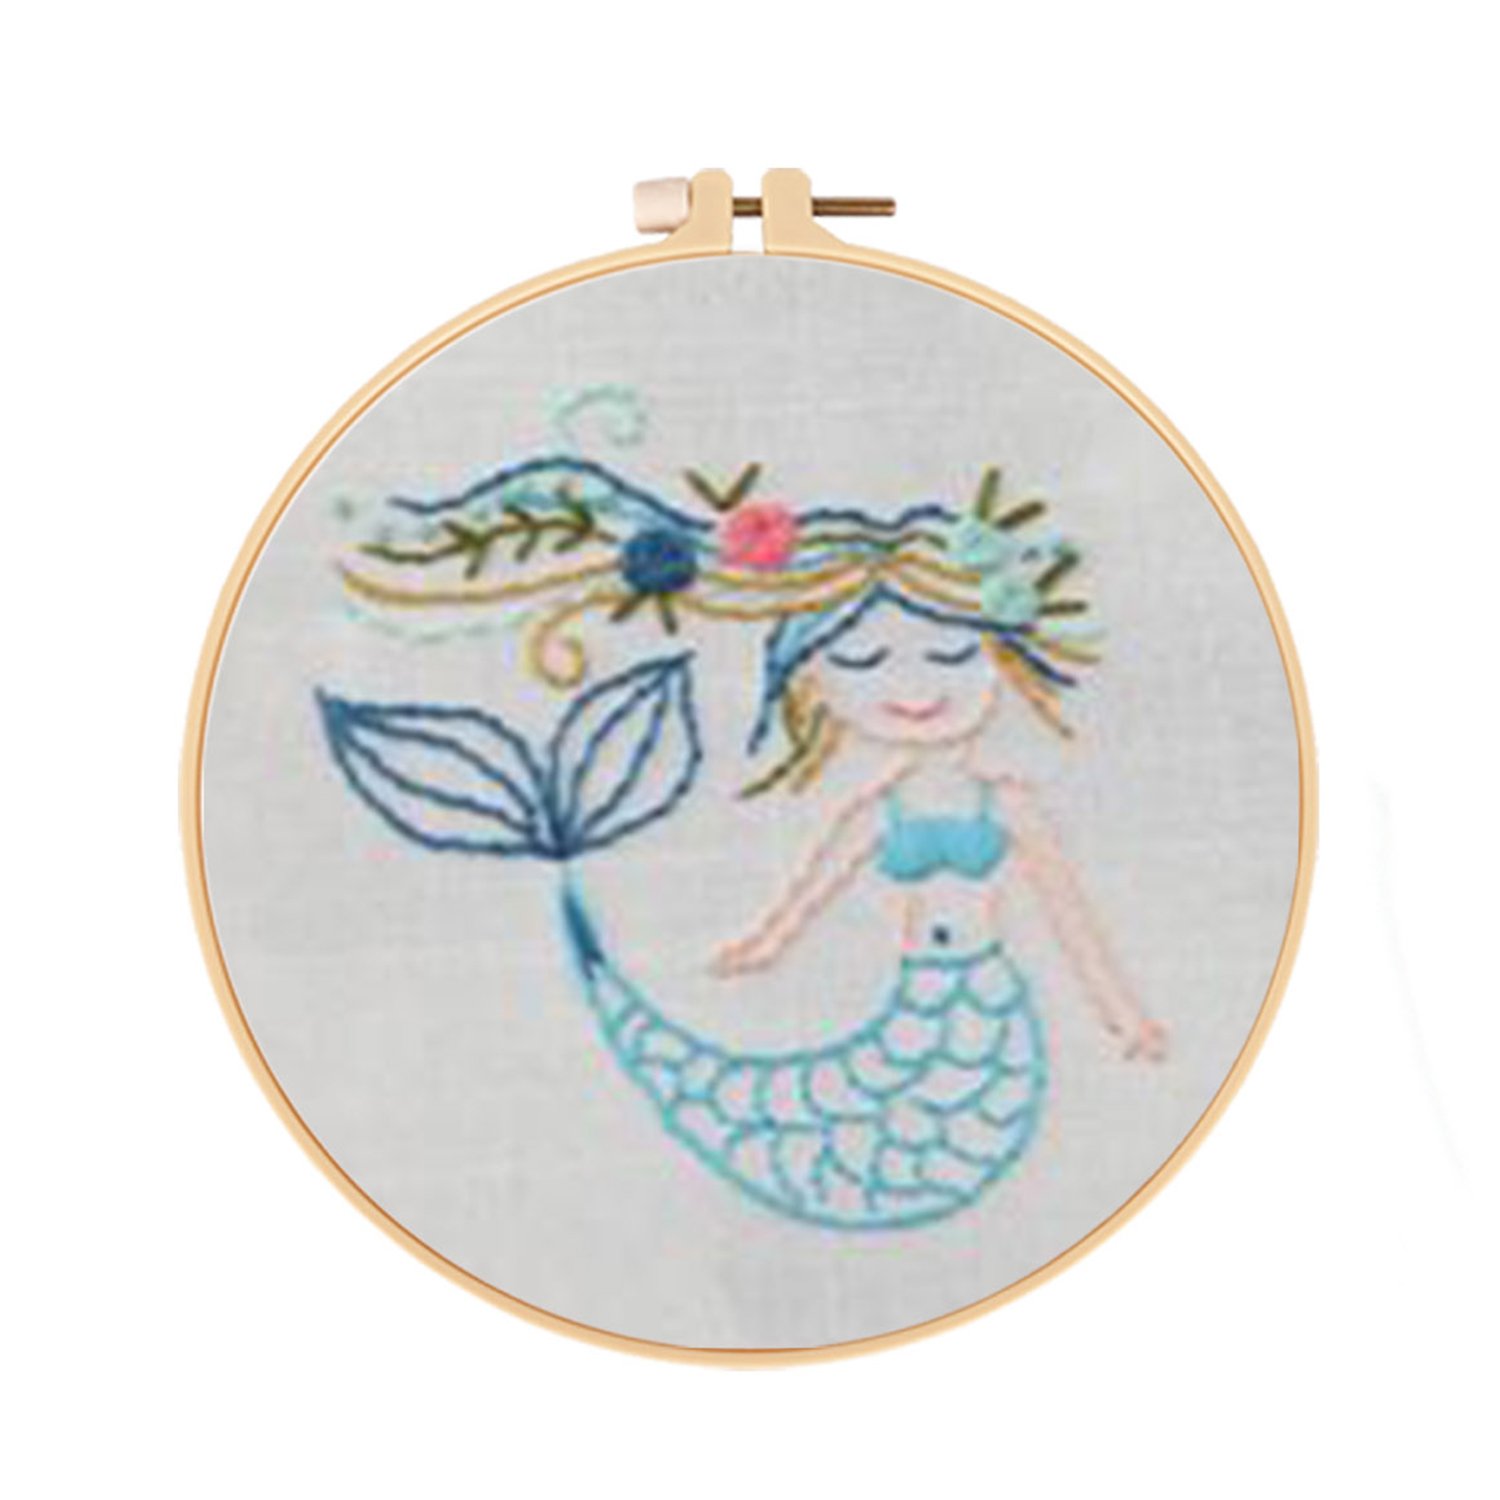 Embroidery Starter Kit Cross stitch kit for Beginners Kids - Little Mermaid Pattern